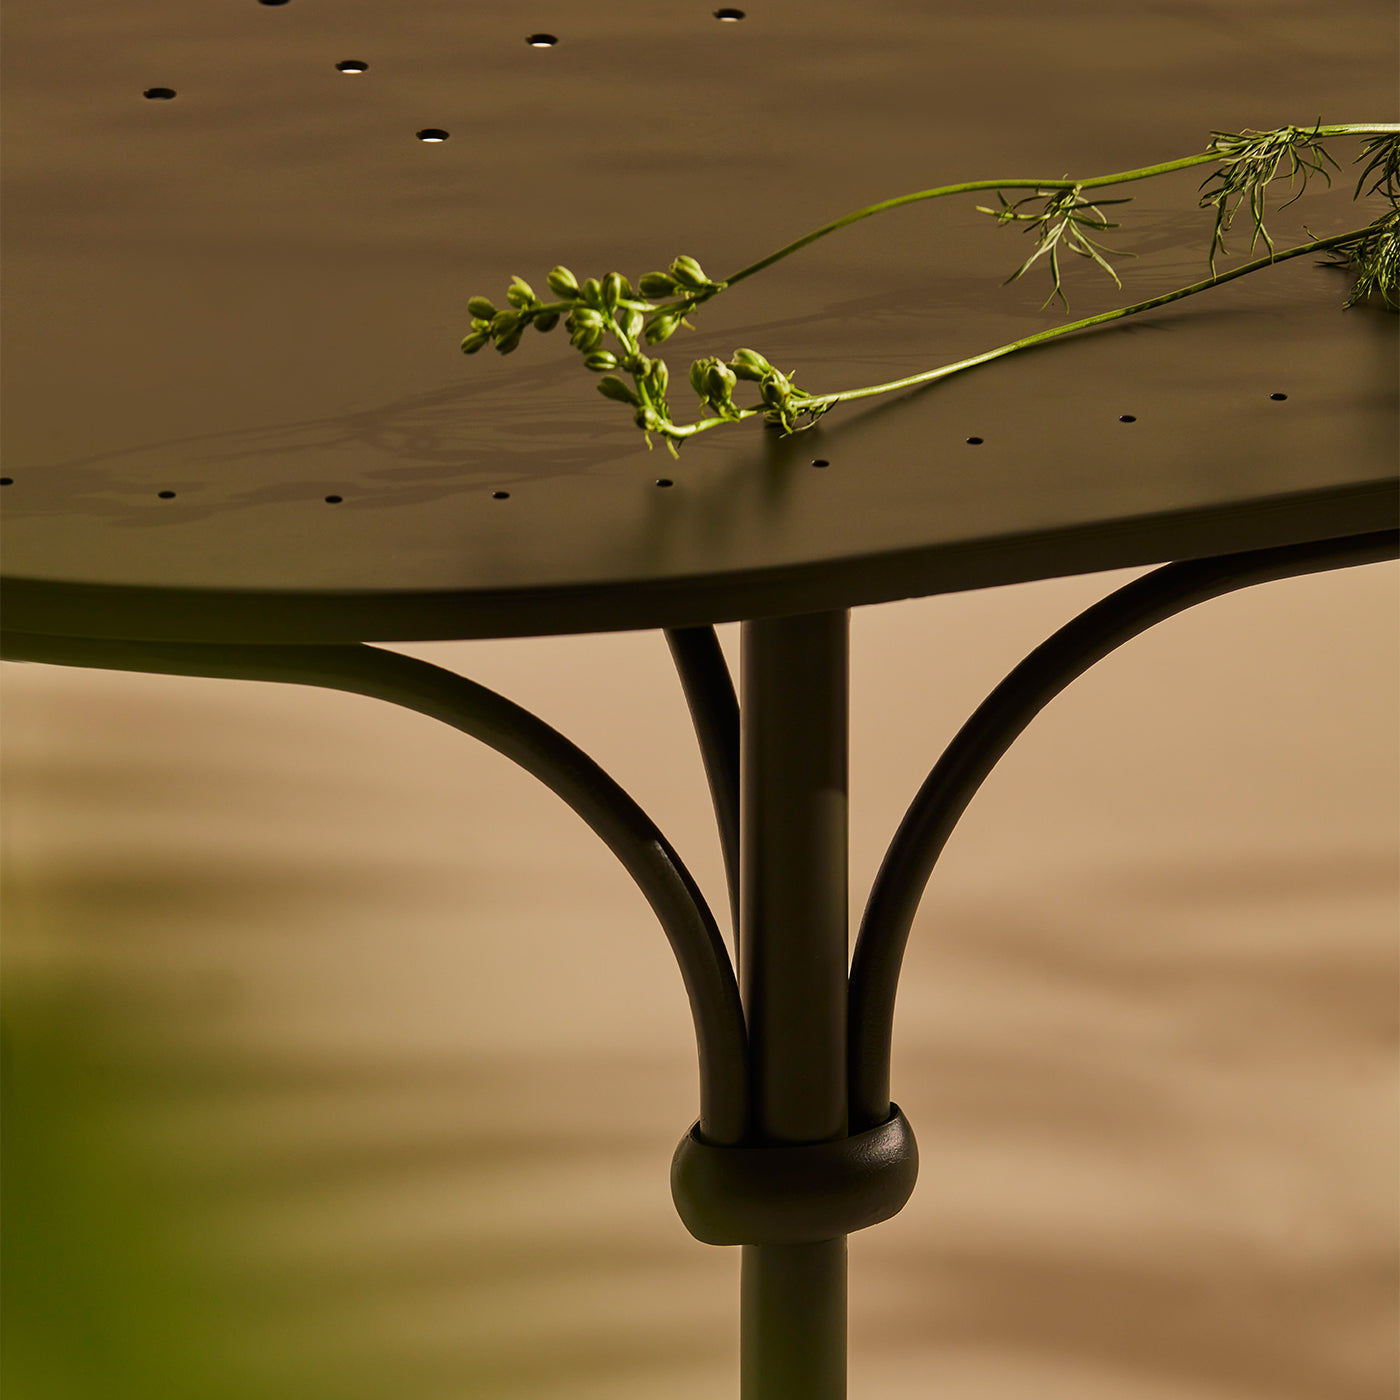 Tavolario Table ovale en fer forgé vert - Vue alternative 1